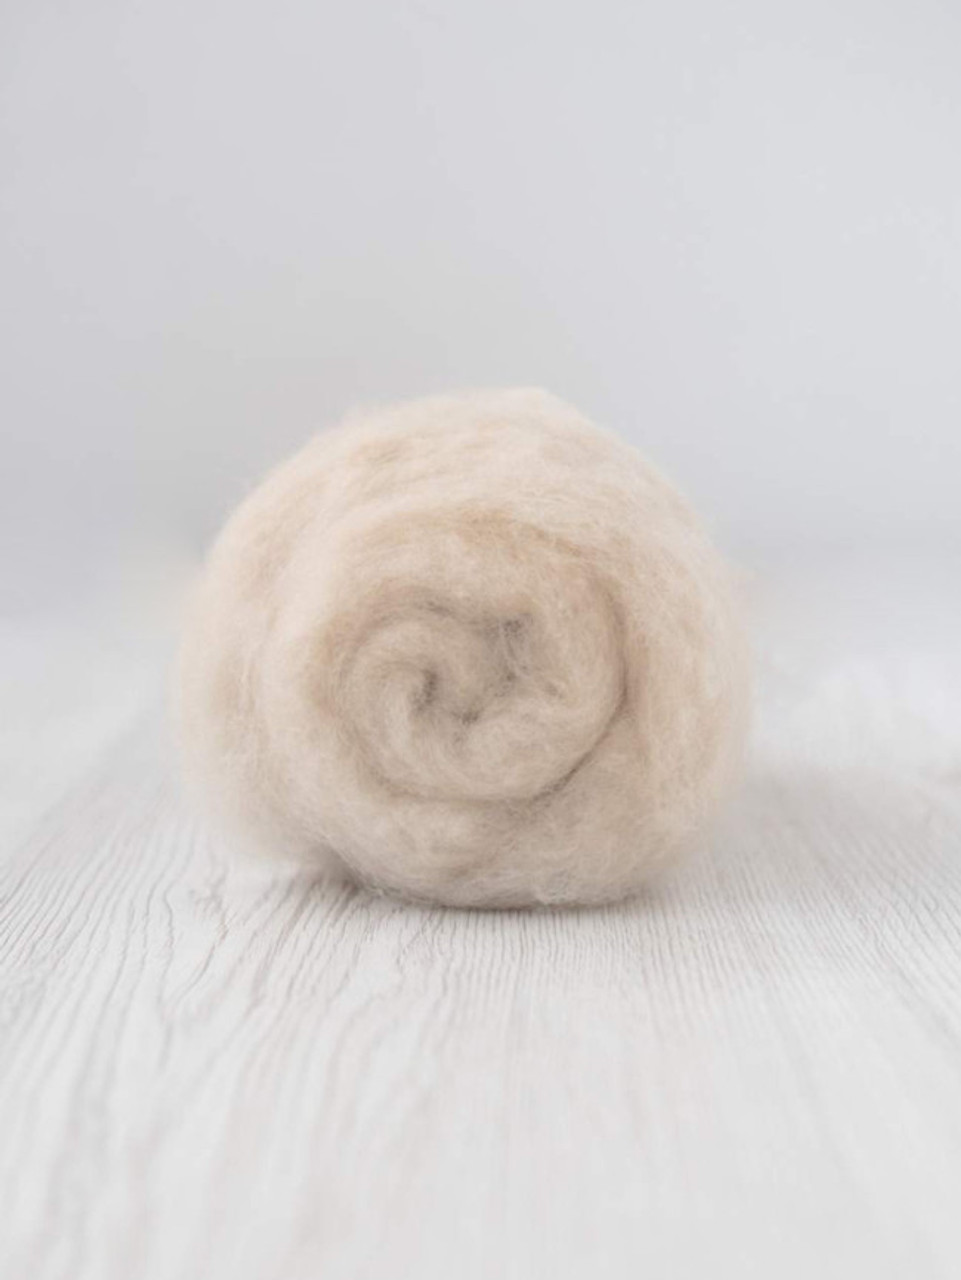 Merino Batt Felting Wool Set, Organic Core Wool